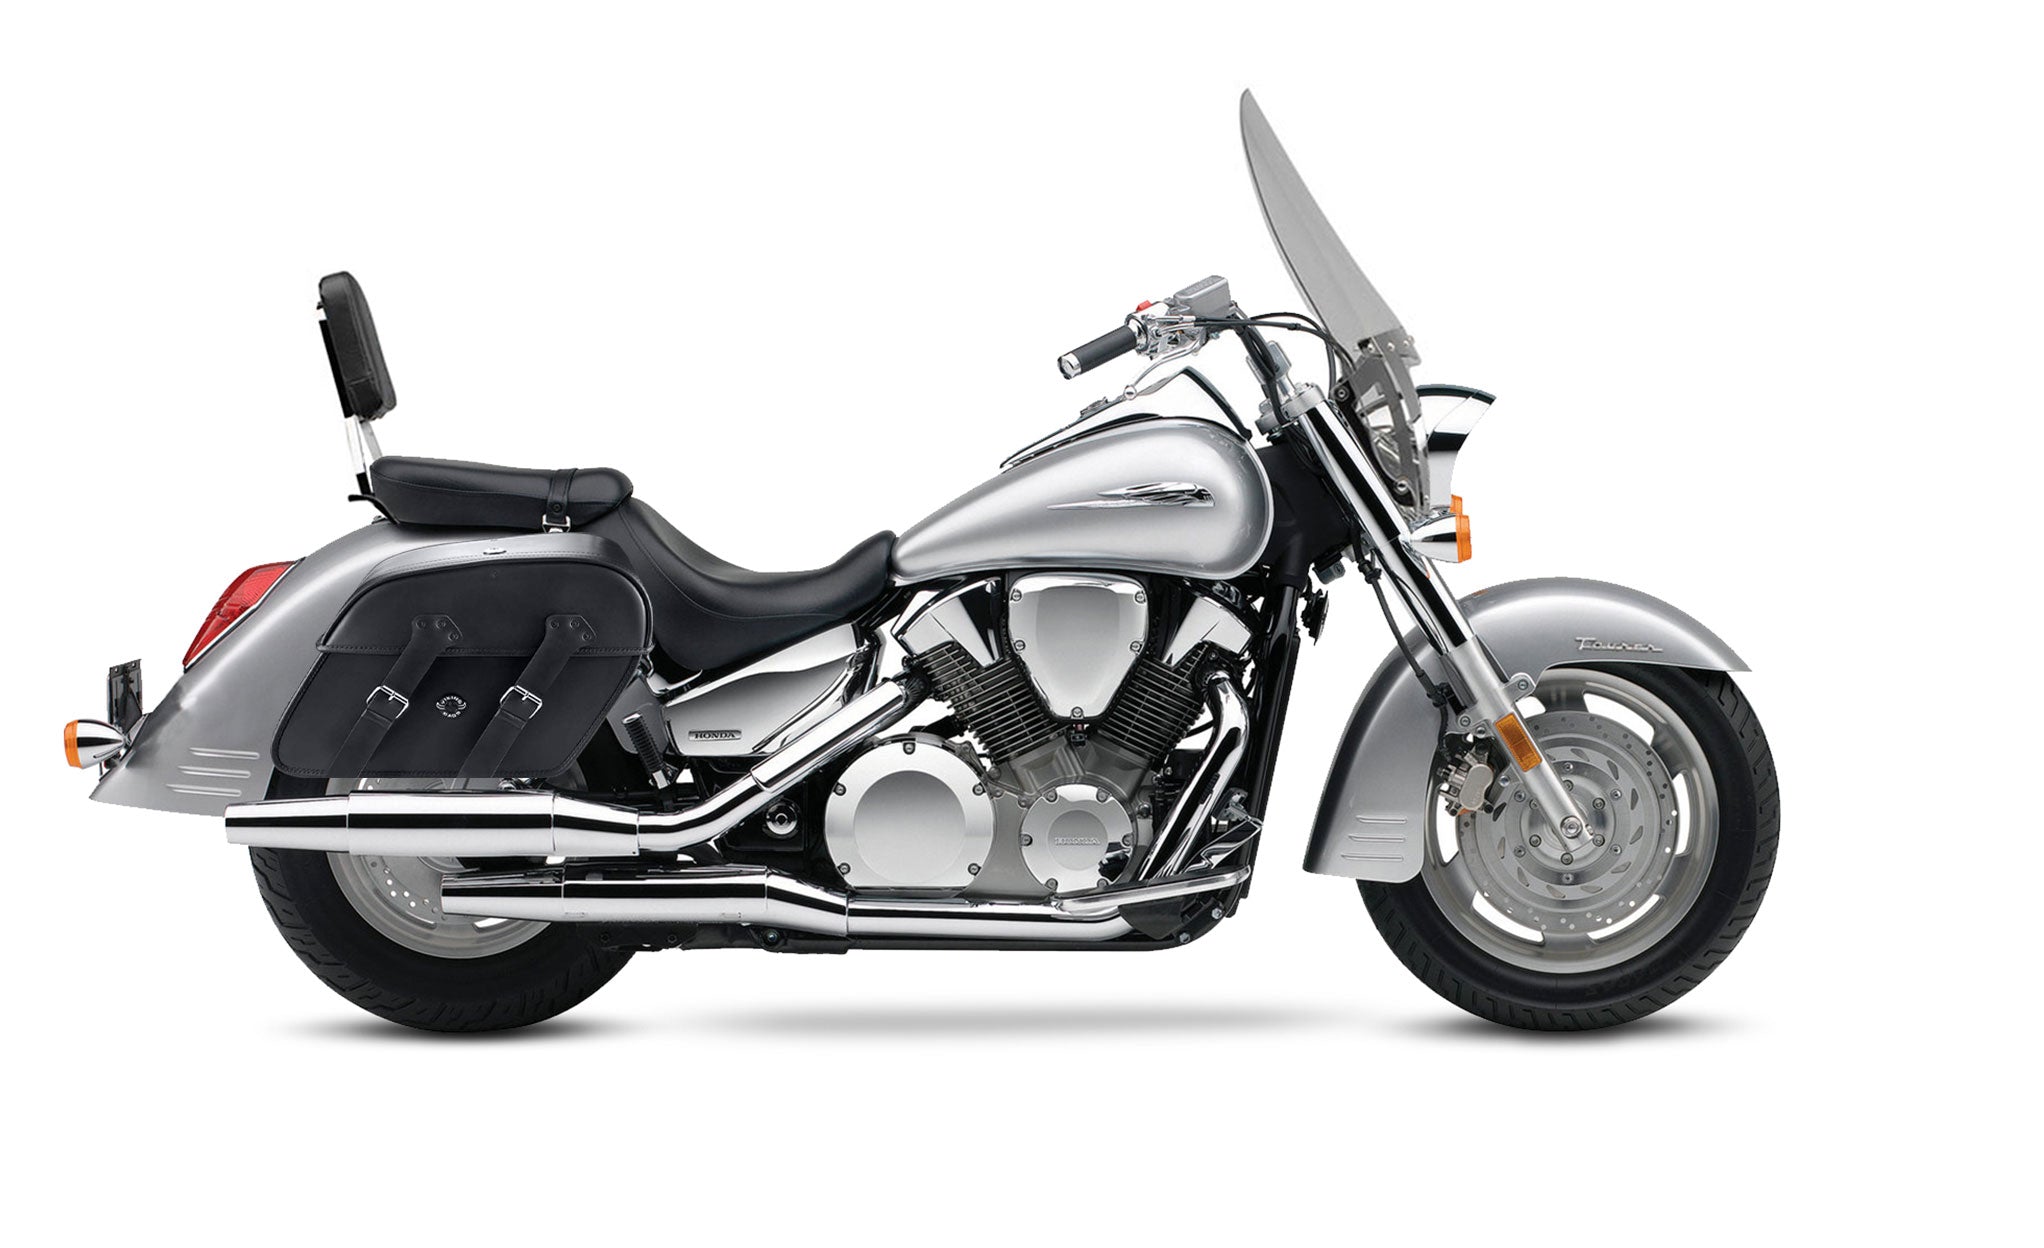 Viking Raven Extra Large Honda Vtx 1300 T Tourer Shock Cut Out Leather Motorcycle Saddlebags on Bike Photo @expand